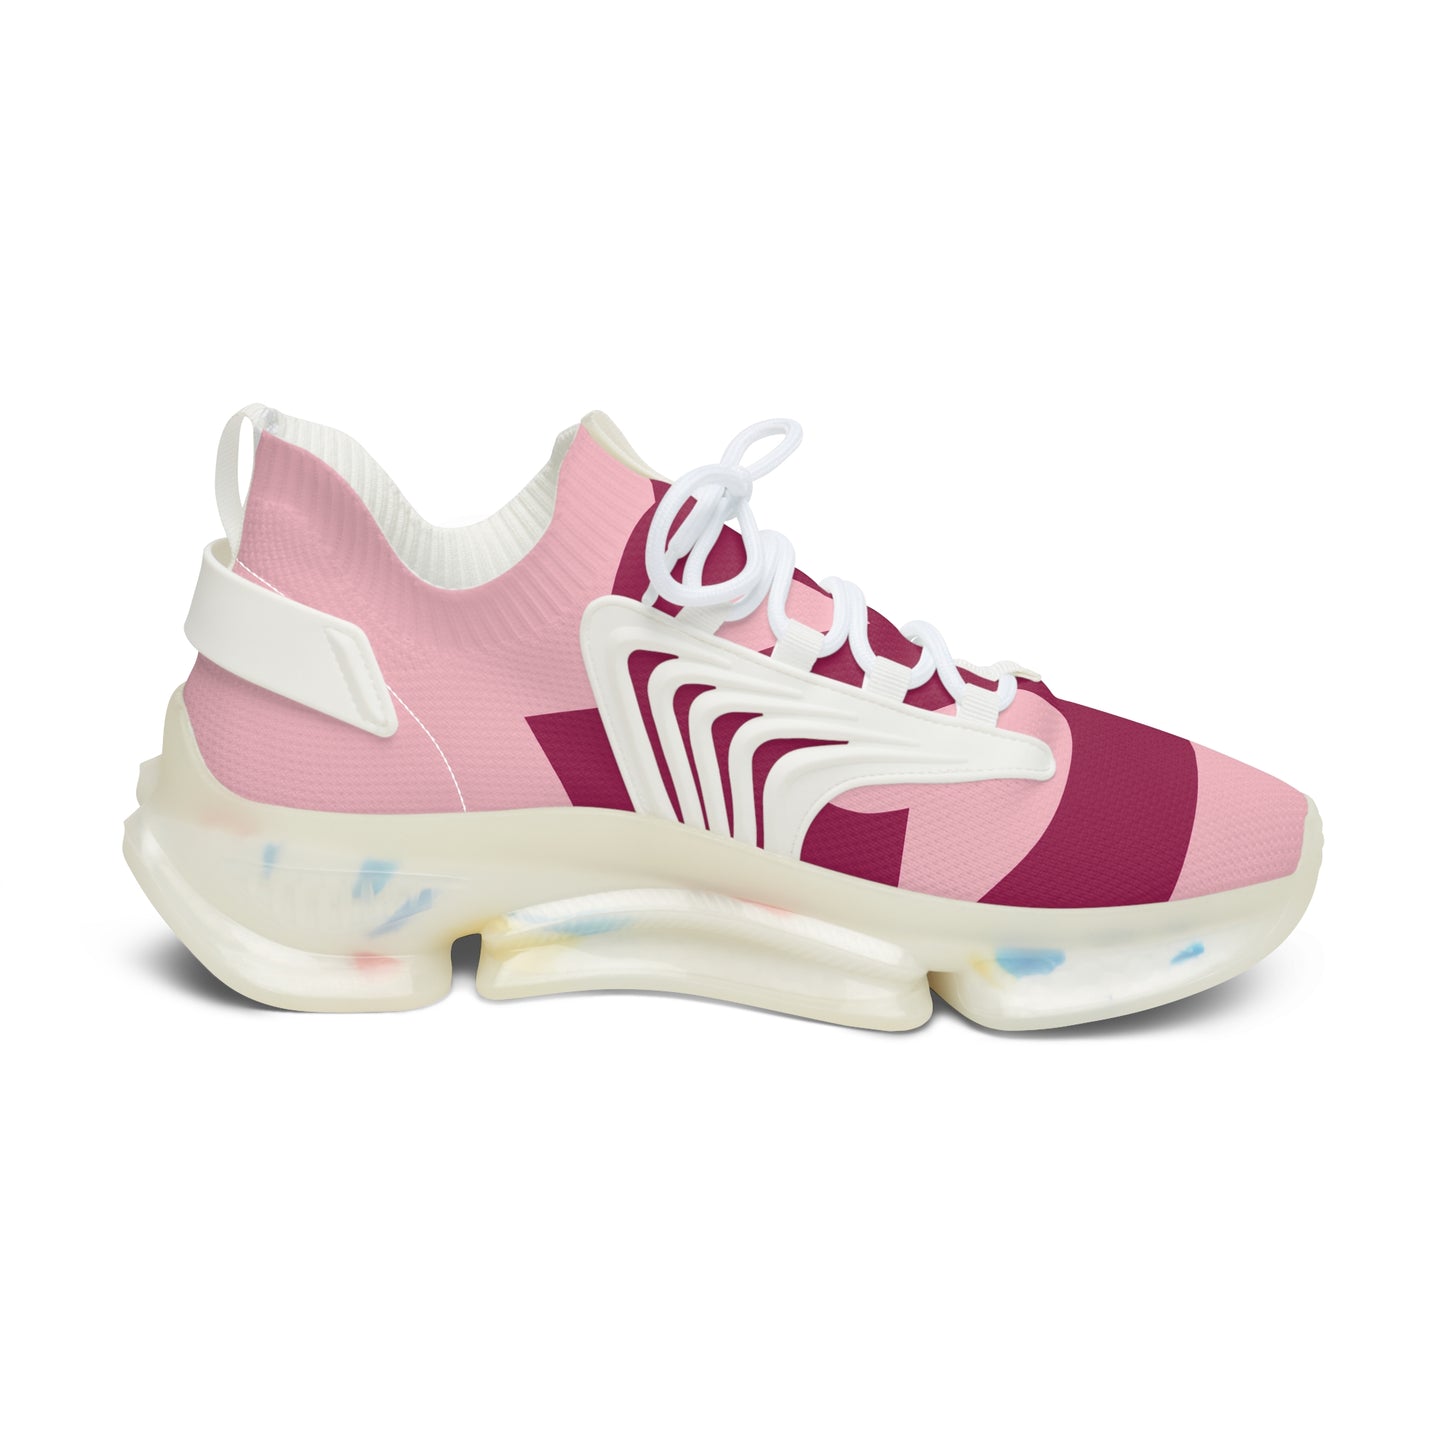 Artemis & Athena Pink-on-Pink Women's Sneakers